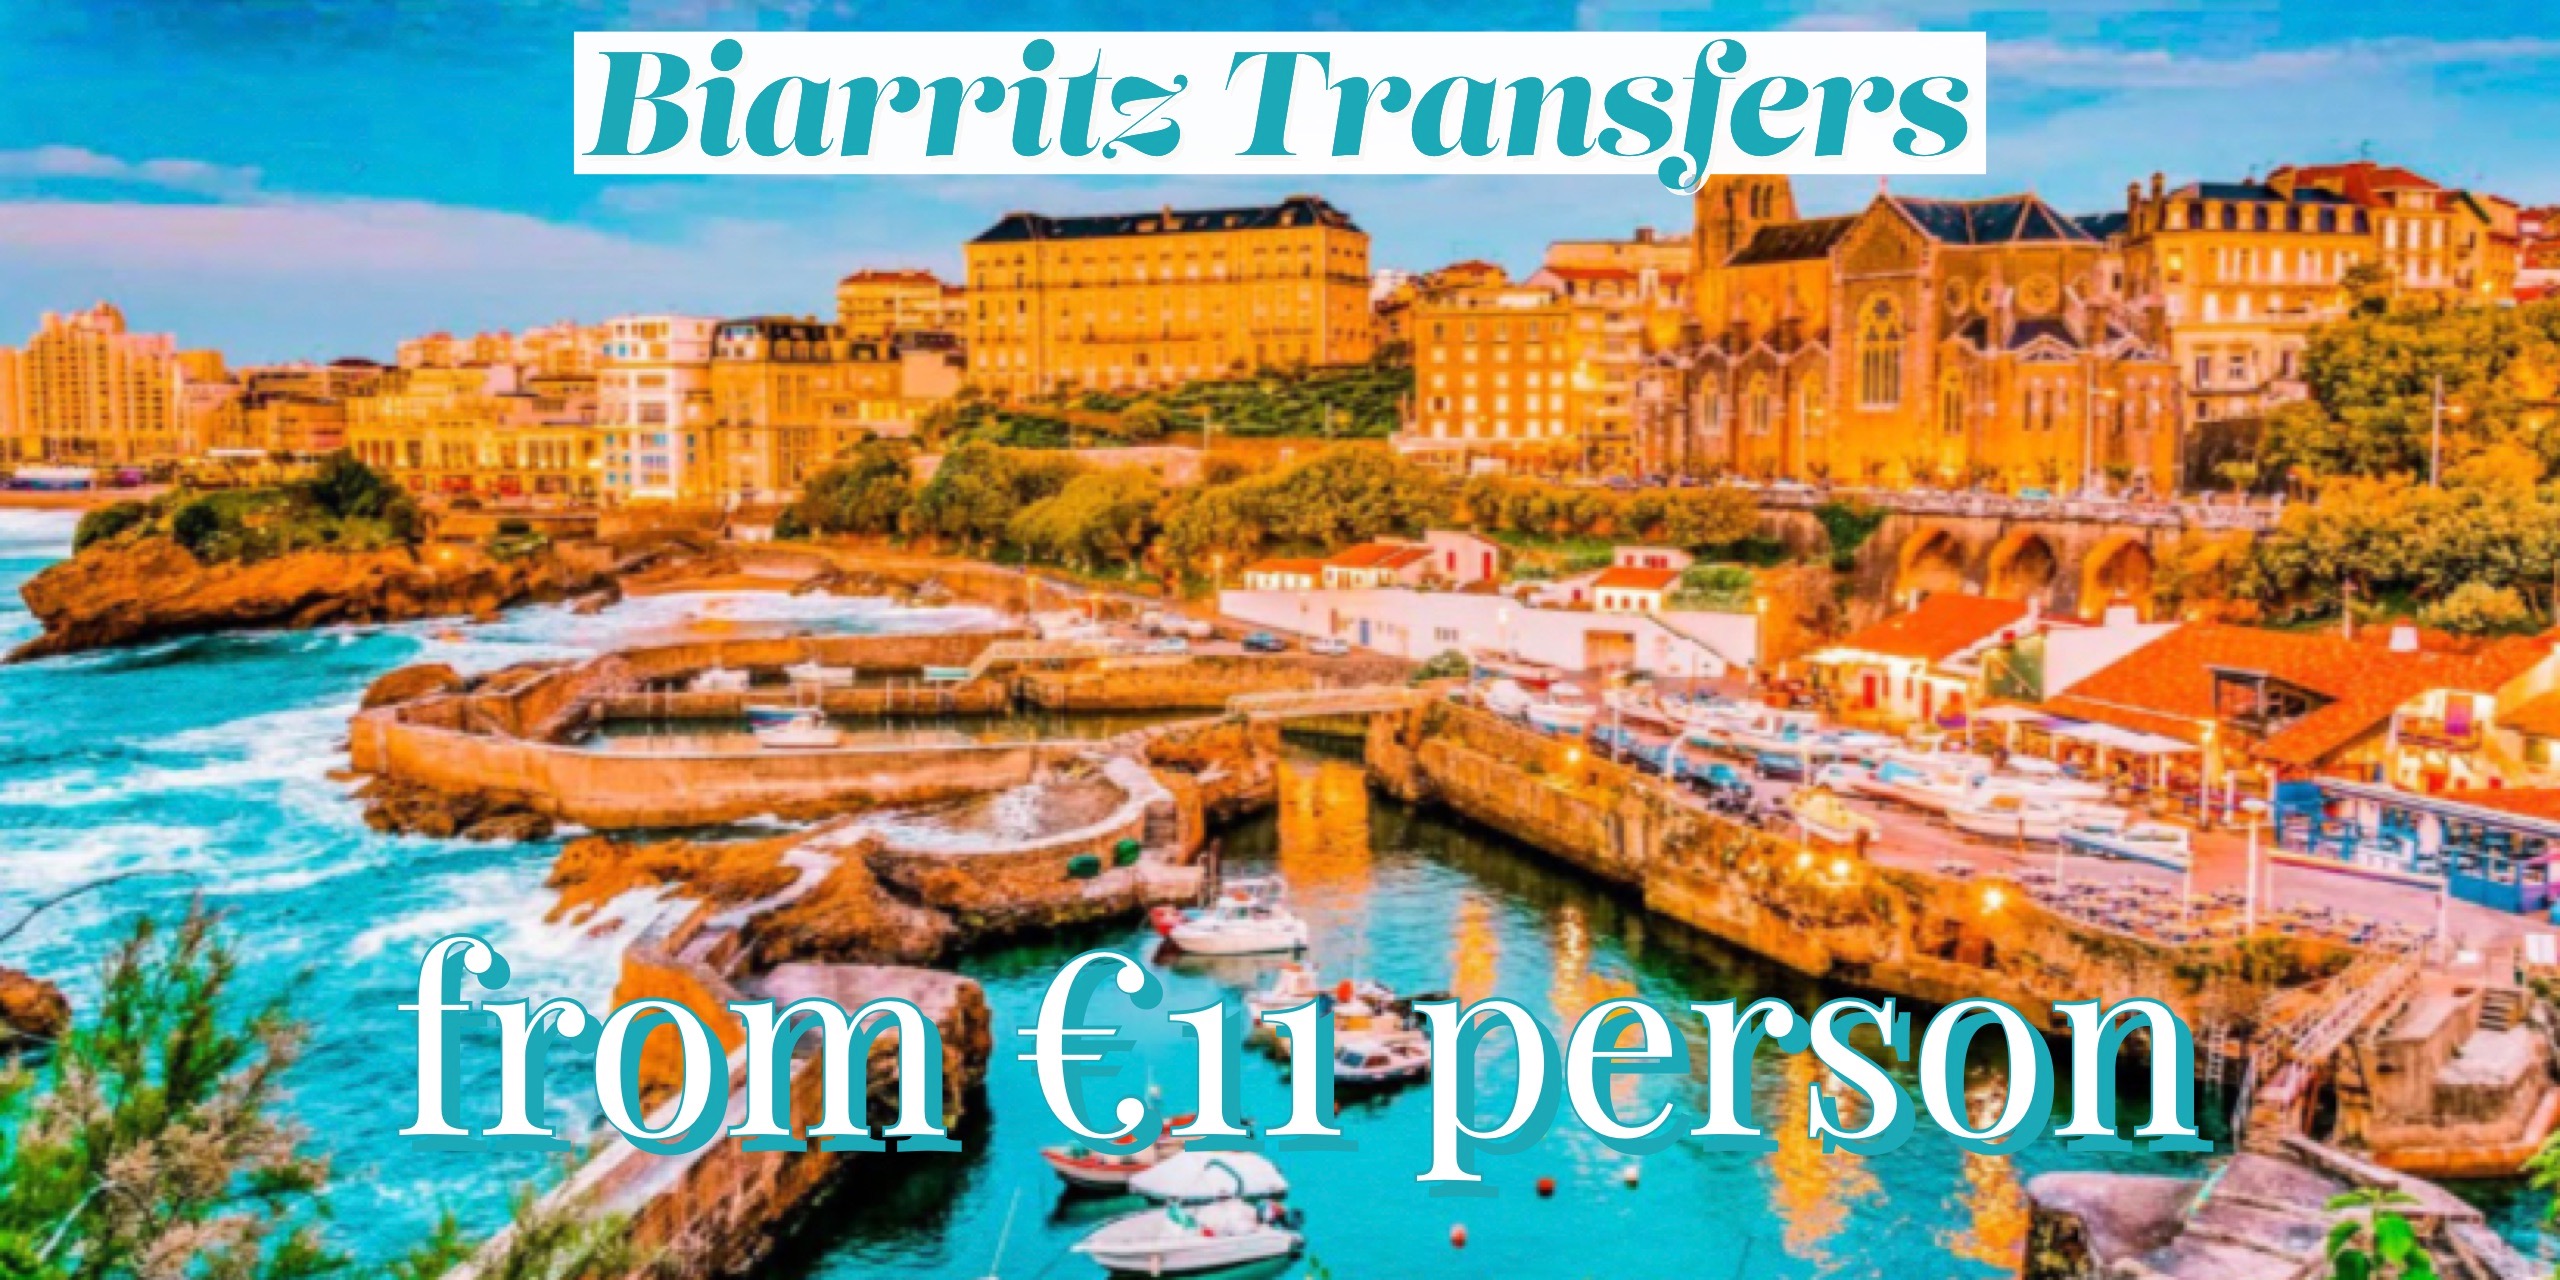 Transfers from San Sebastian Airport to Biarritz